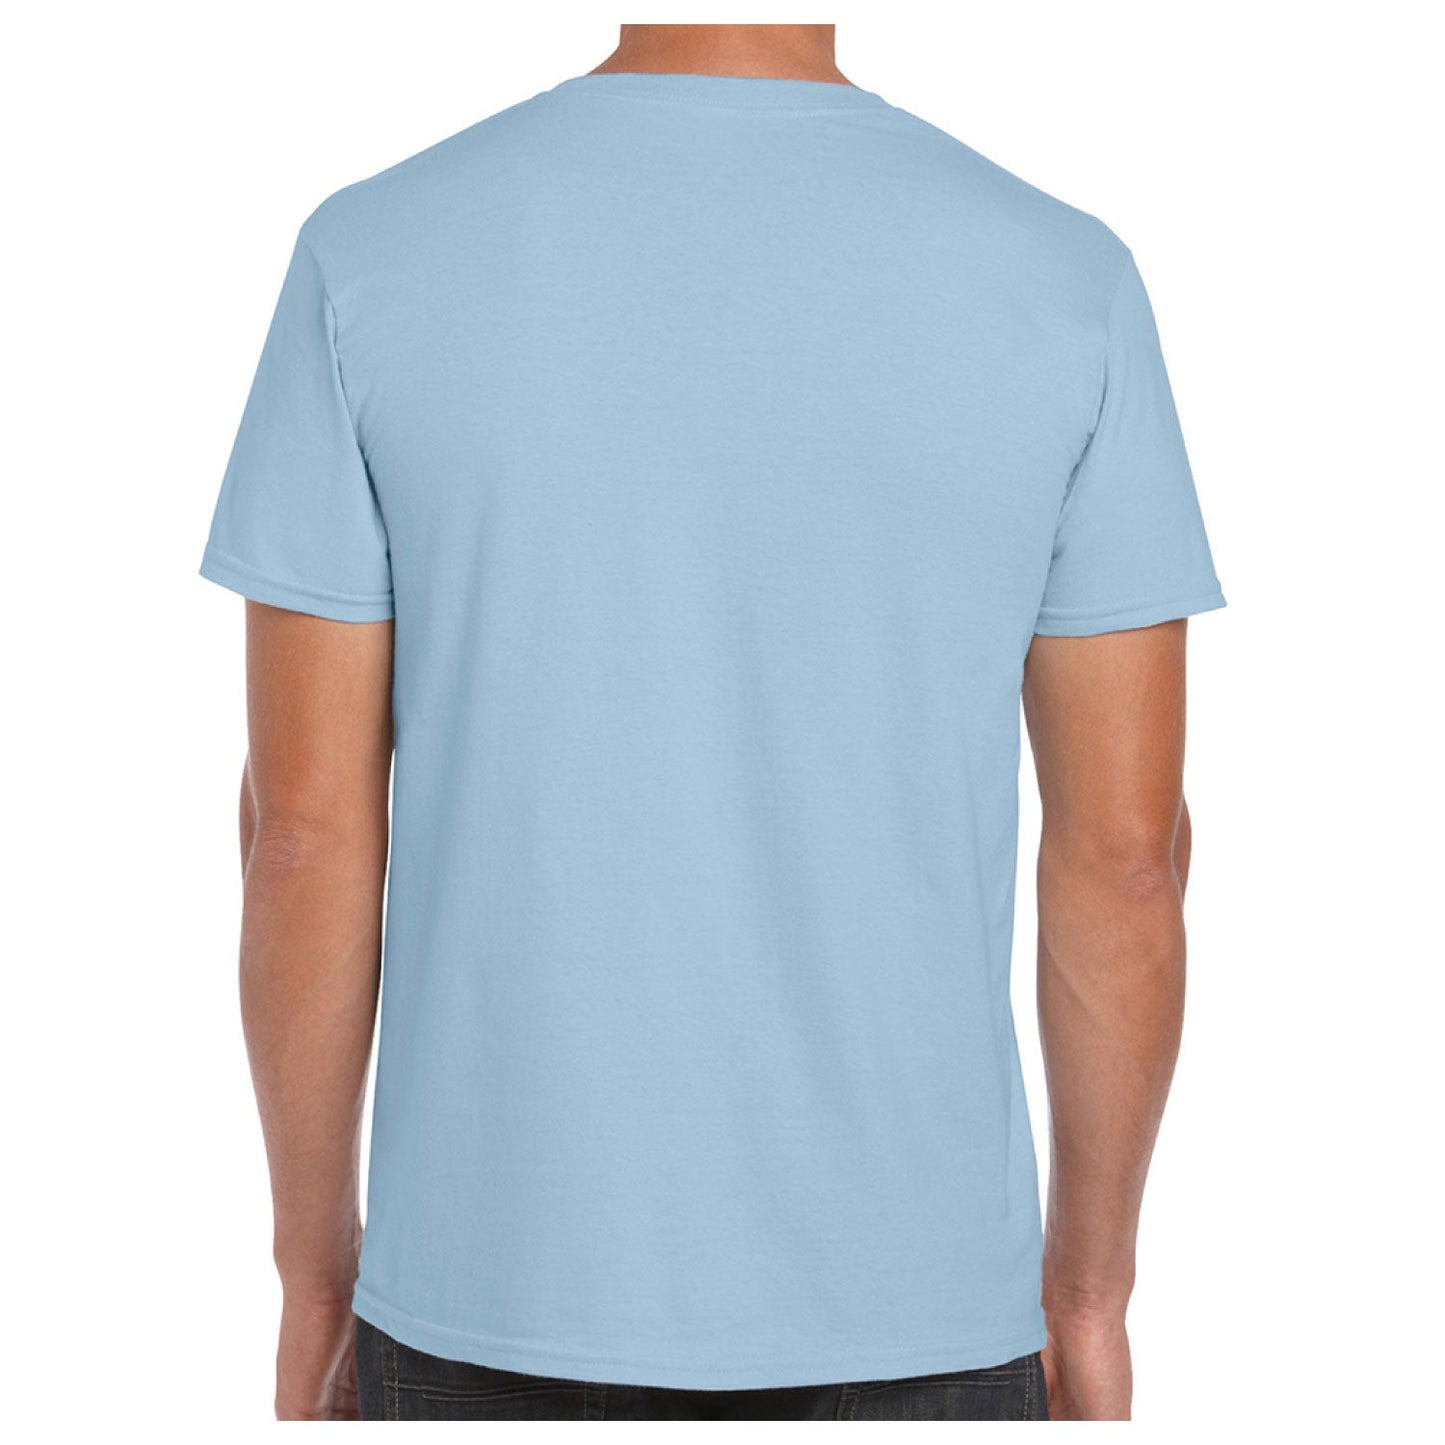 Malvern Town Football Club Hillsiders T-Shirt